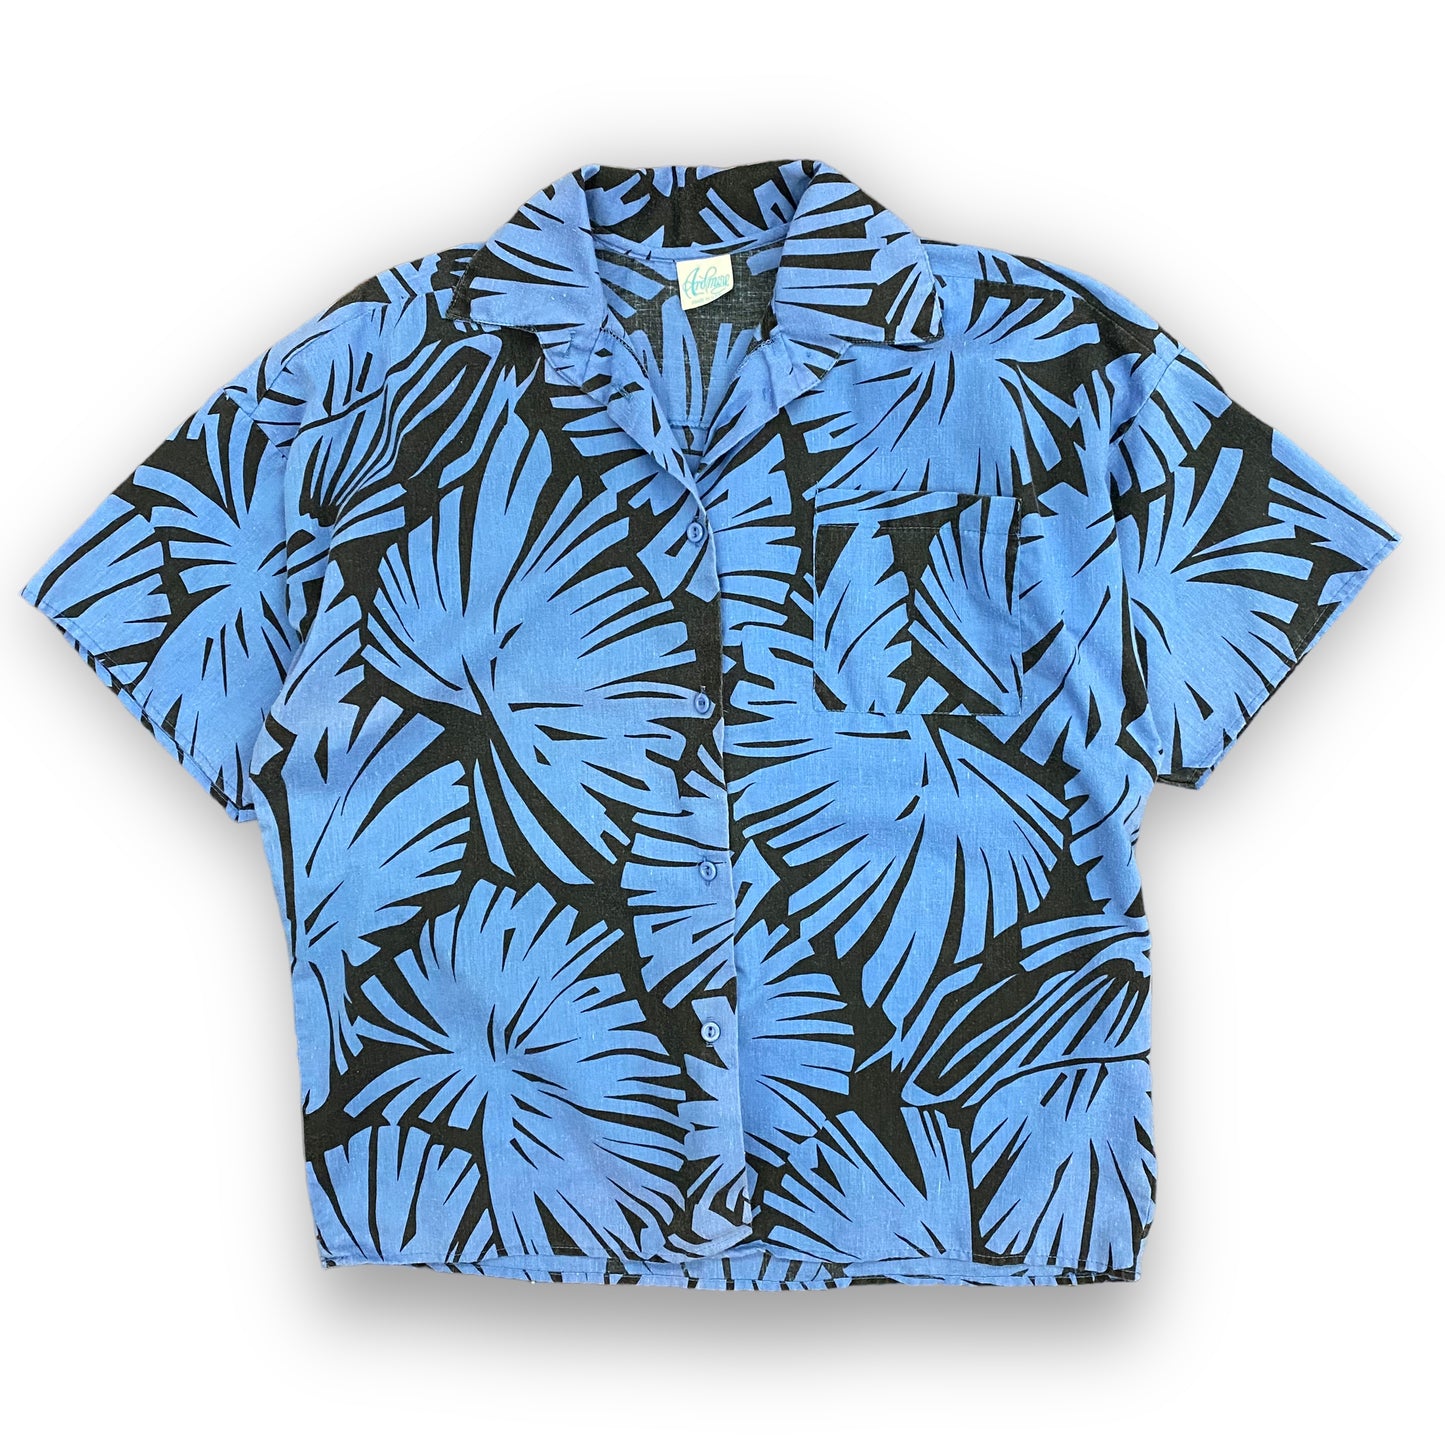 Vintage 1980s Black & Blue Floral Hawaiian Shirt - Size Large